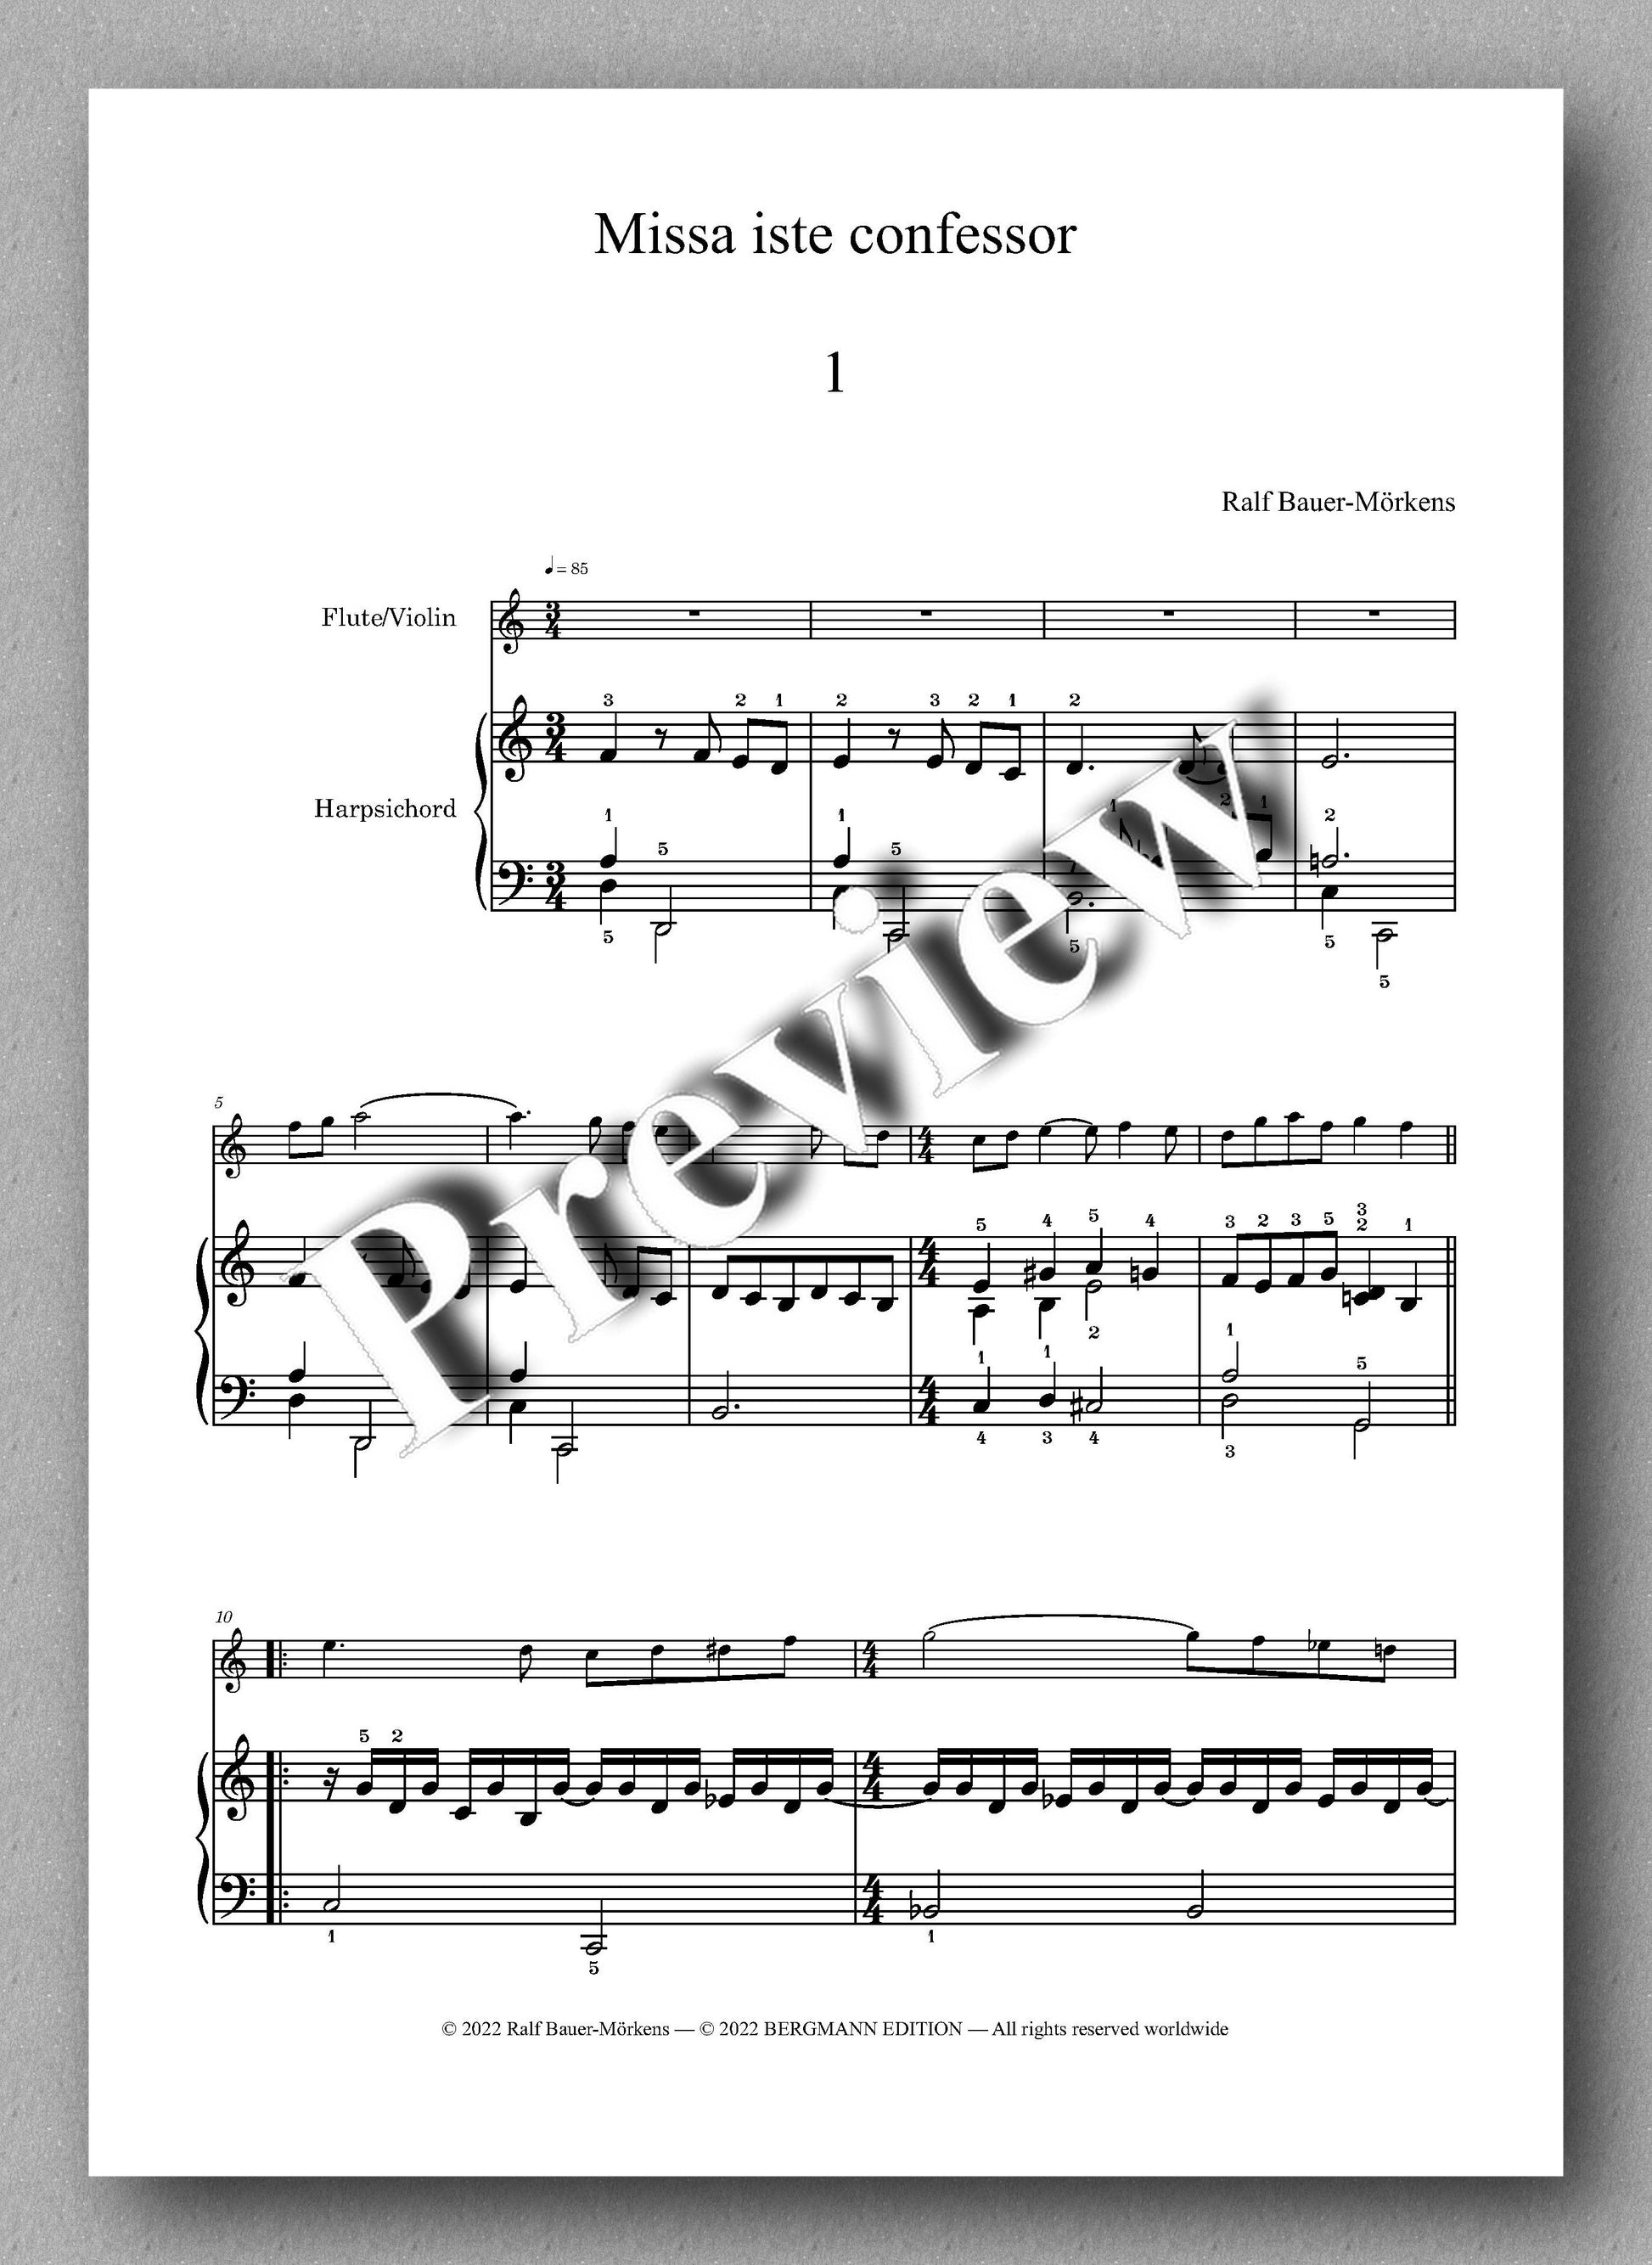 Ralf Bauer-Mörkens, Missa iste confessor - preview of the music score 1